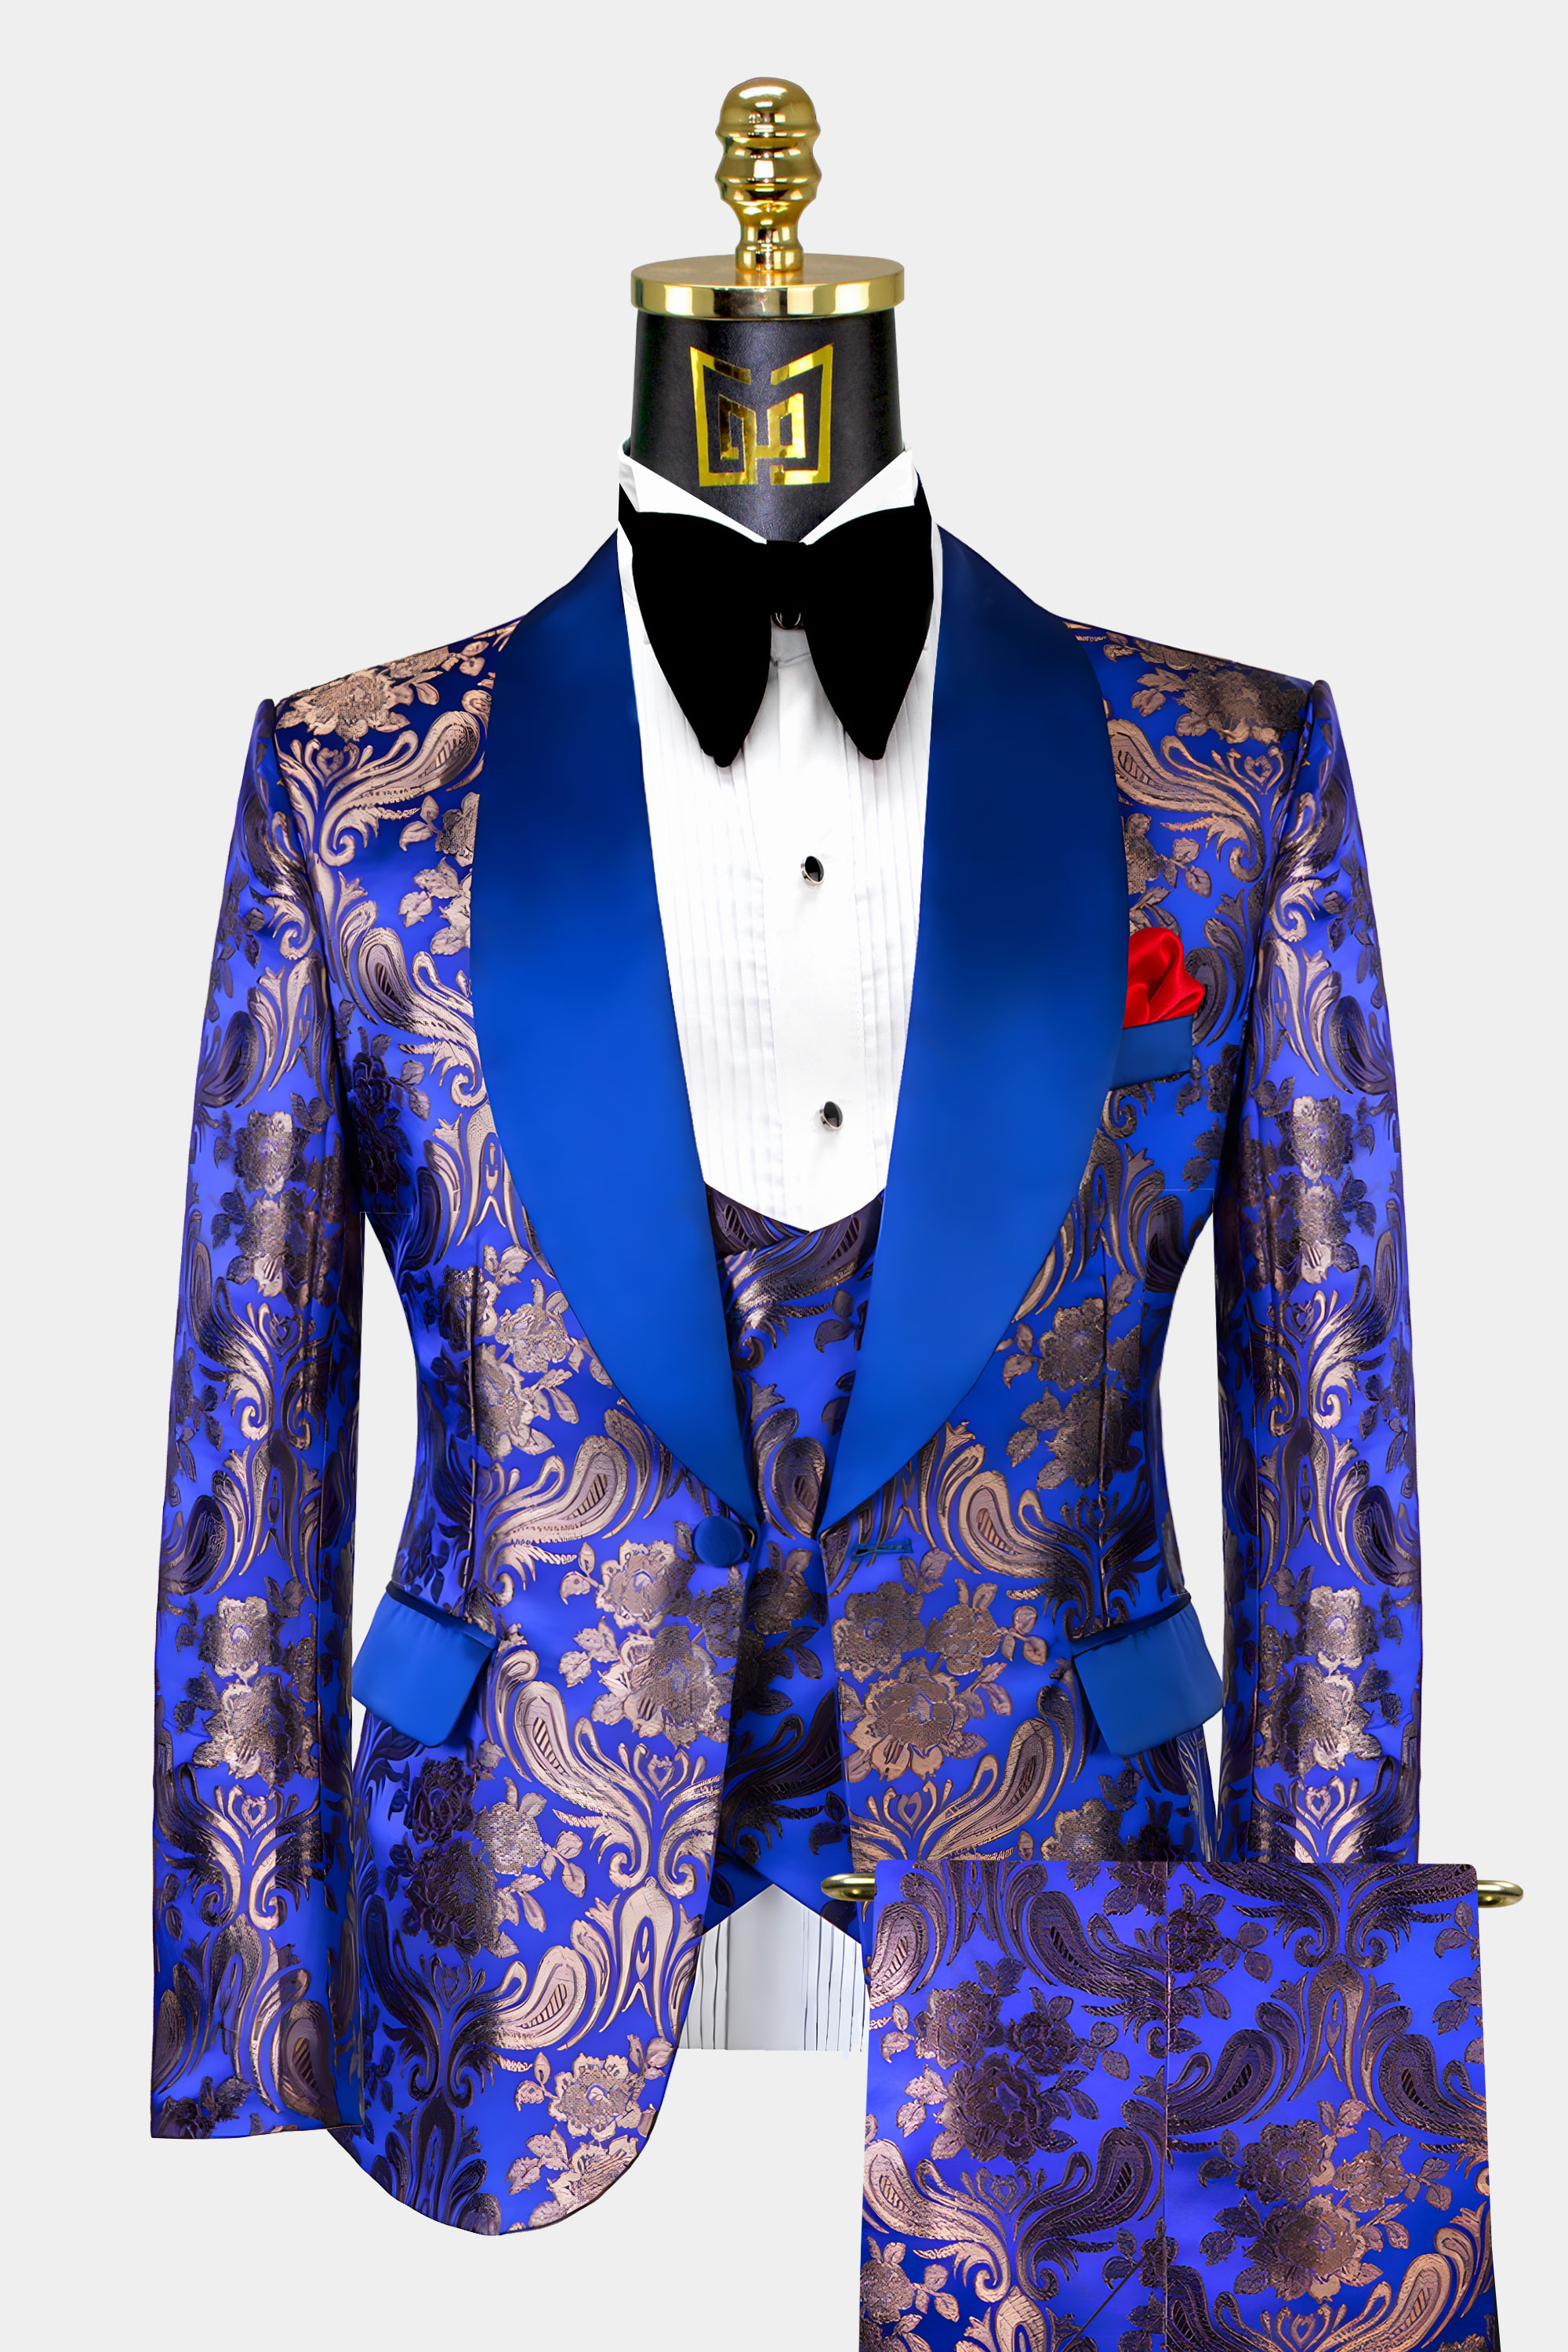 Men's Wedding Prom Suits Groom Tuxedos Best Man Suits Purple Satin Formal Suits 